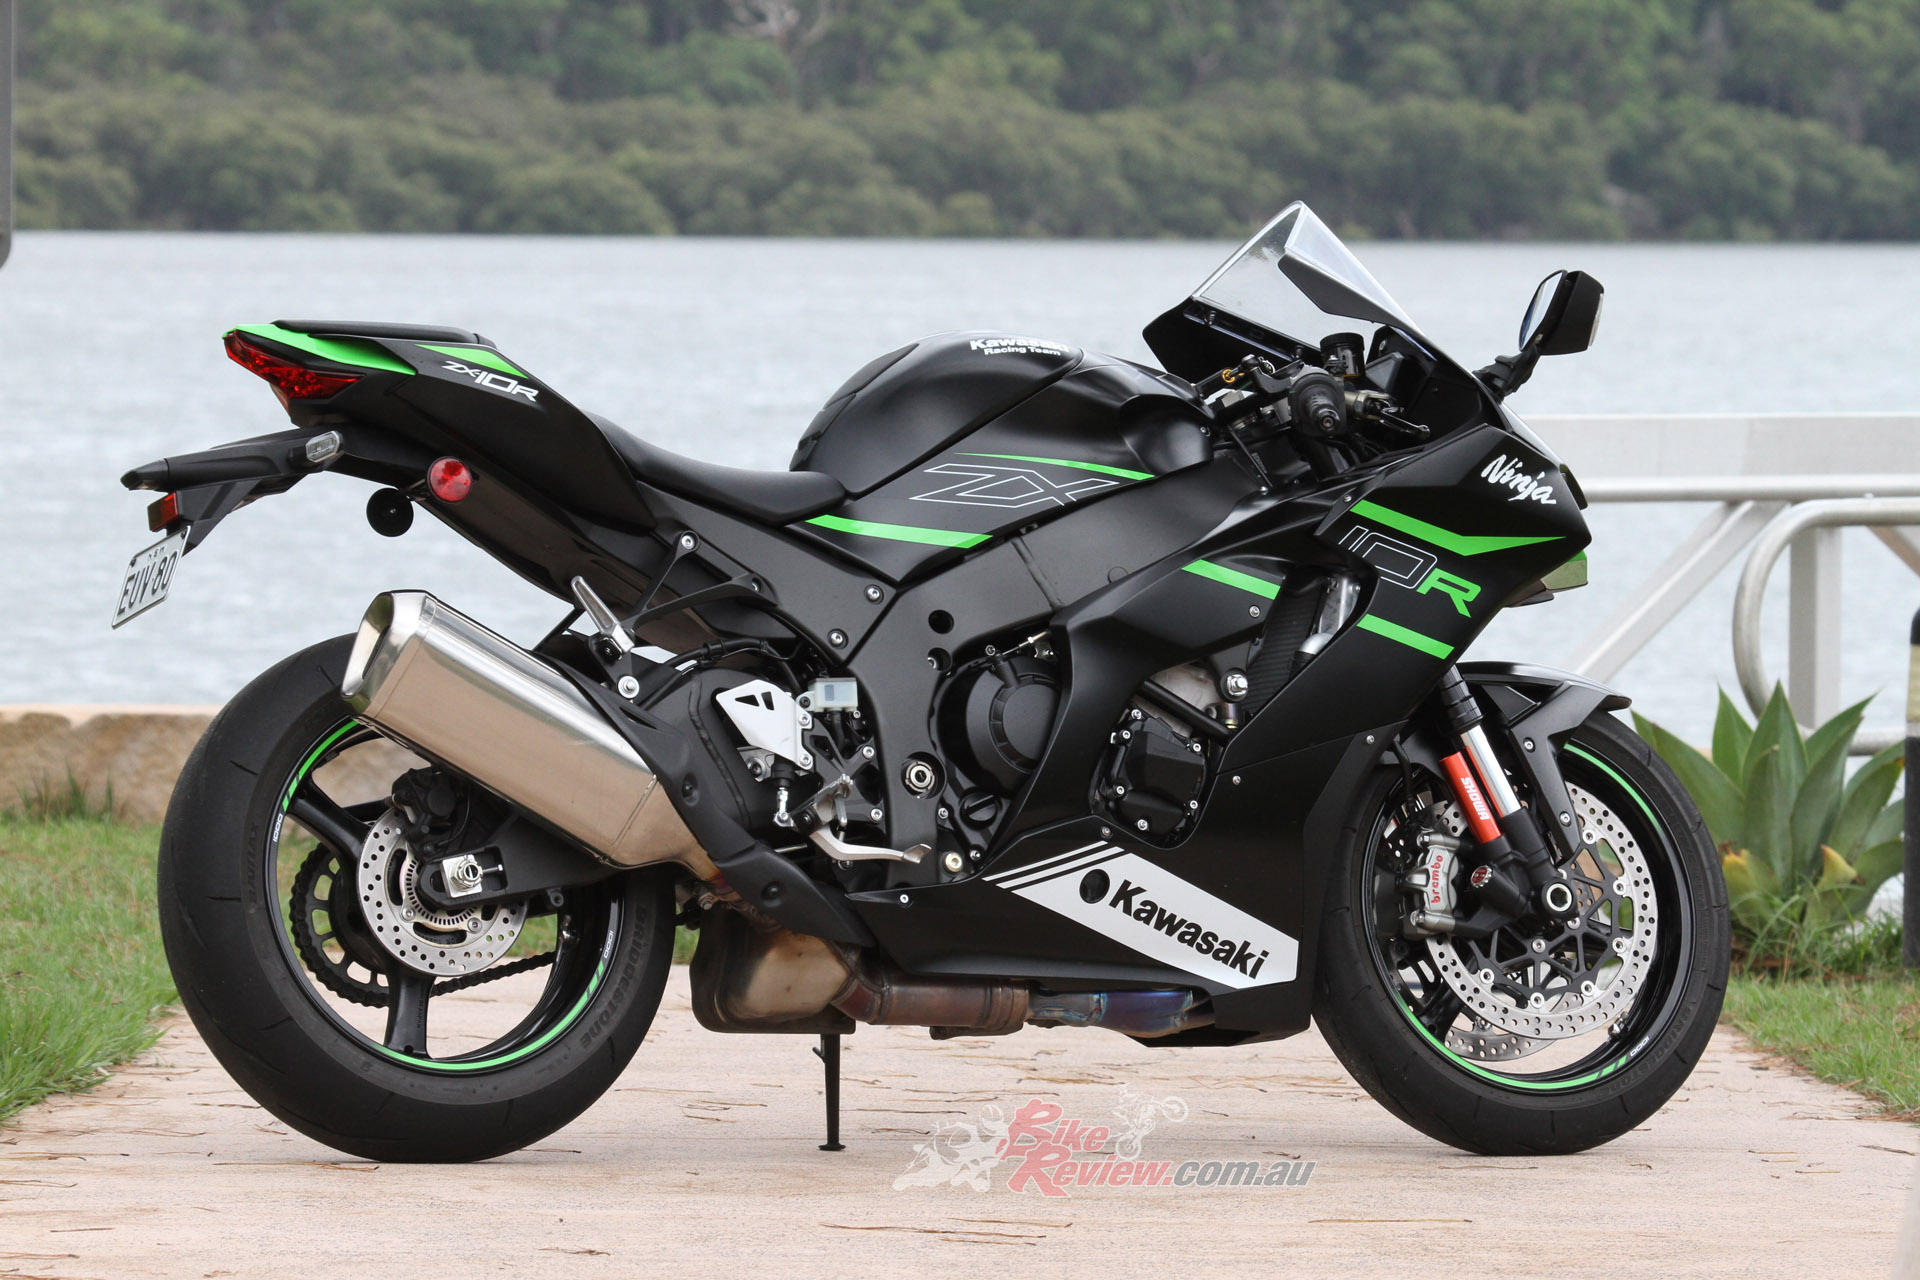 Review: 2021 Kawasaki Ninja ZX-10R Superbike - Bike Review